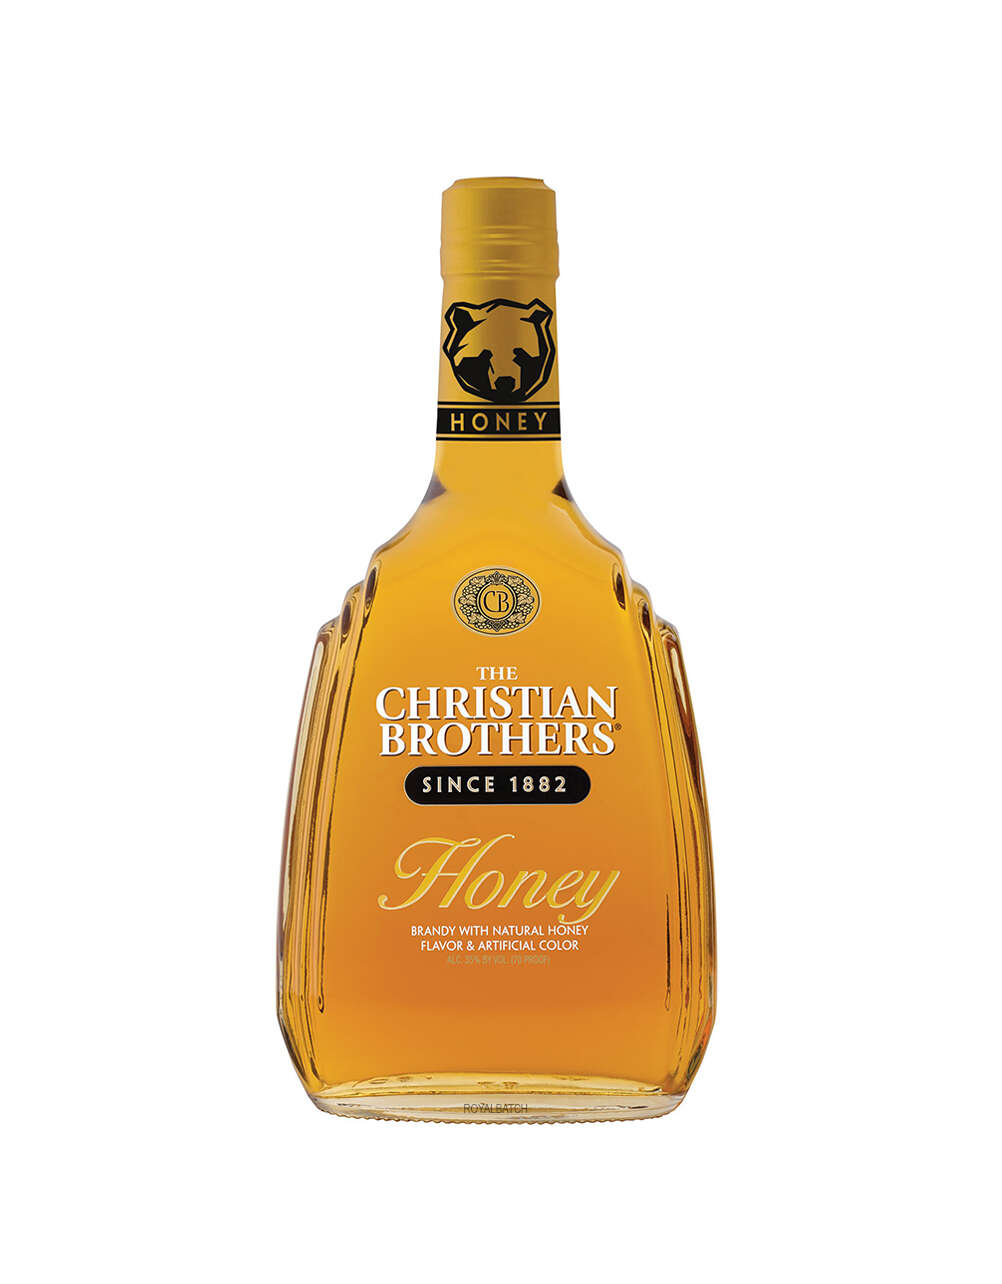 The Christian Brothers Honey Brandy